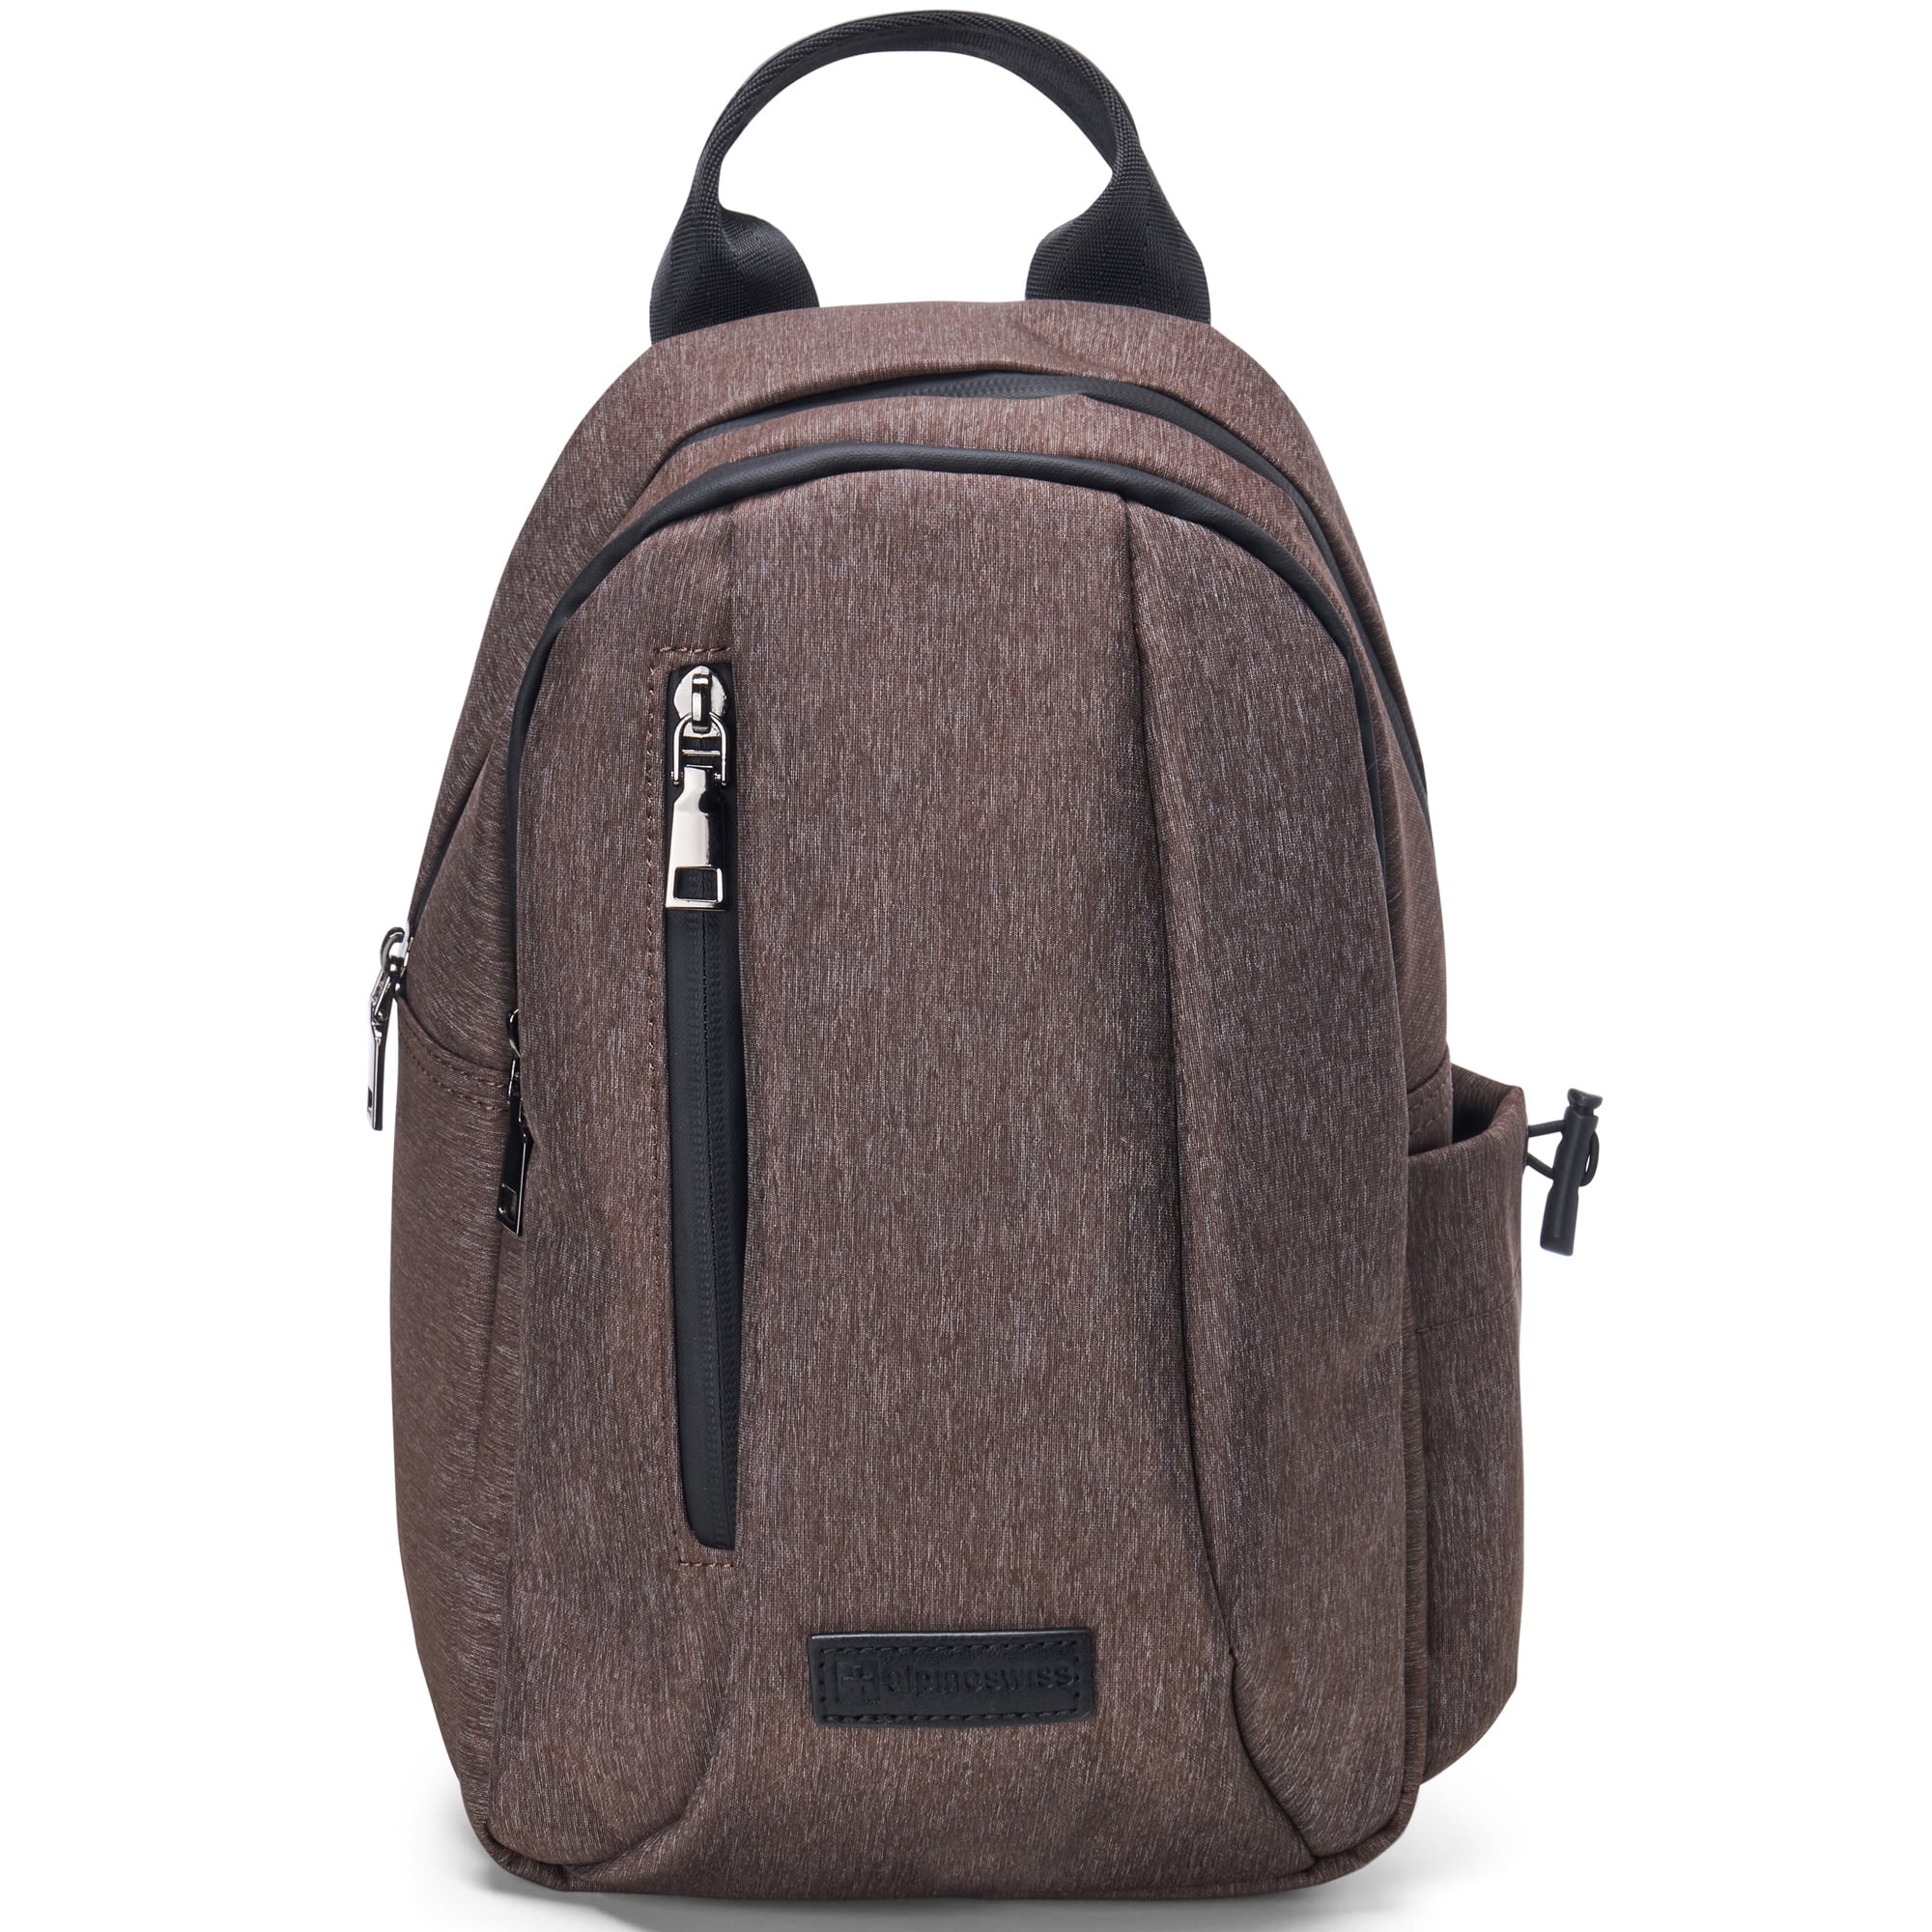 Alpine Swiss Sling Bag Crossbody Backpack Chest Pack Casual Day Bag Shoulder Bag Brown 